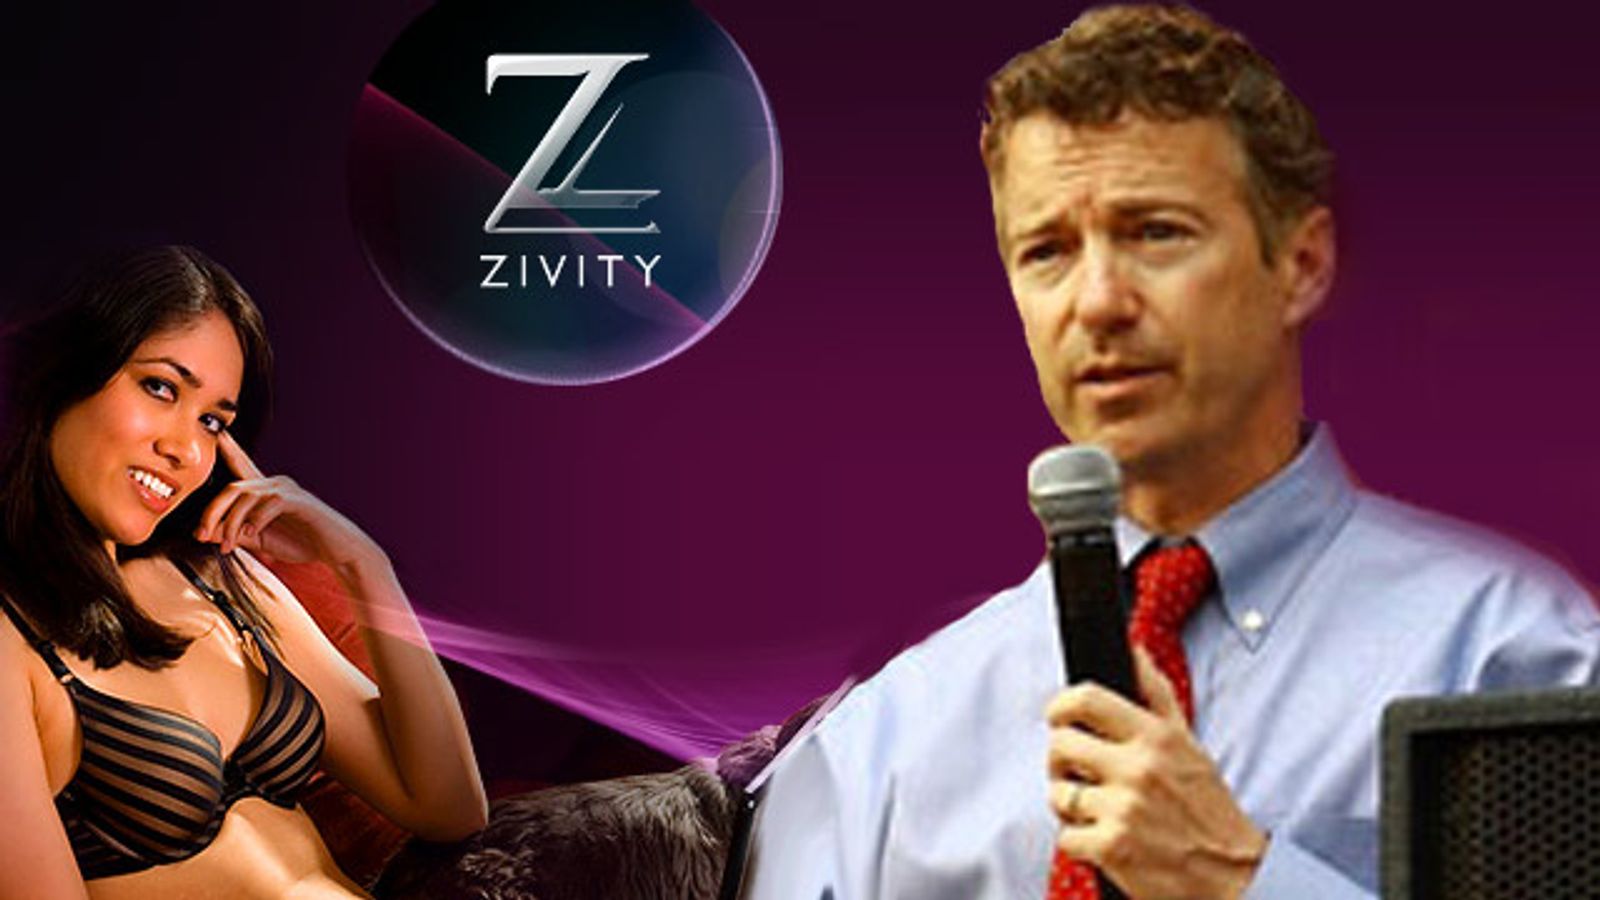 Zivity.com Owner Donates to Rand Paul Senate Race